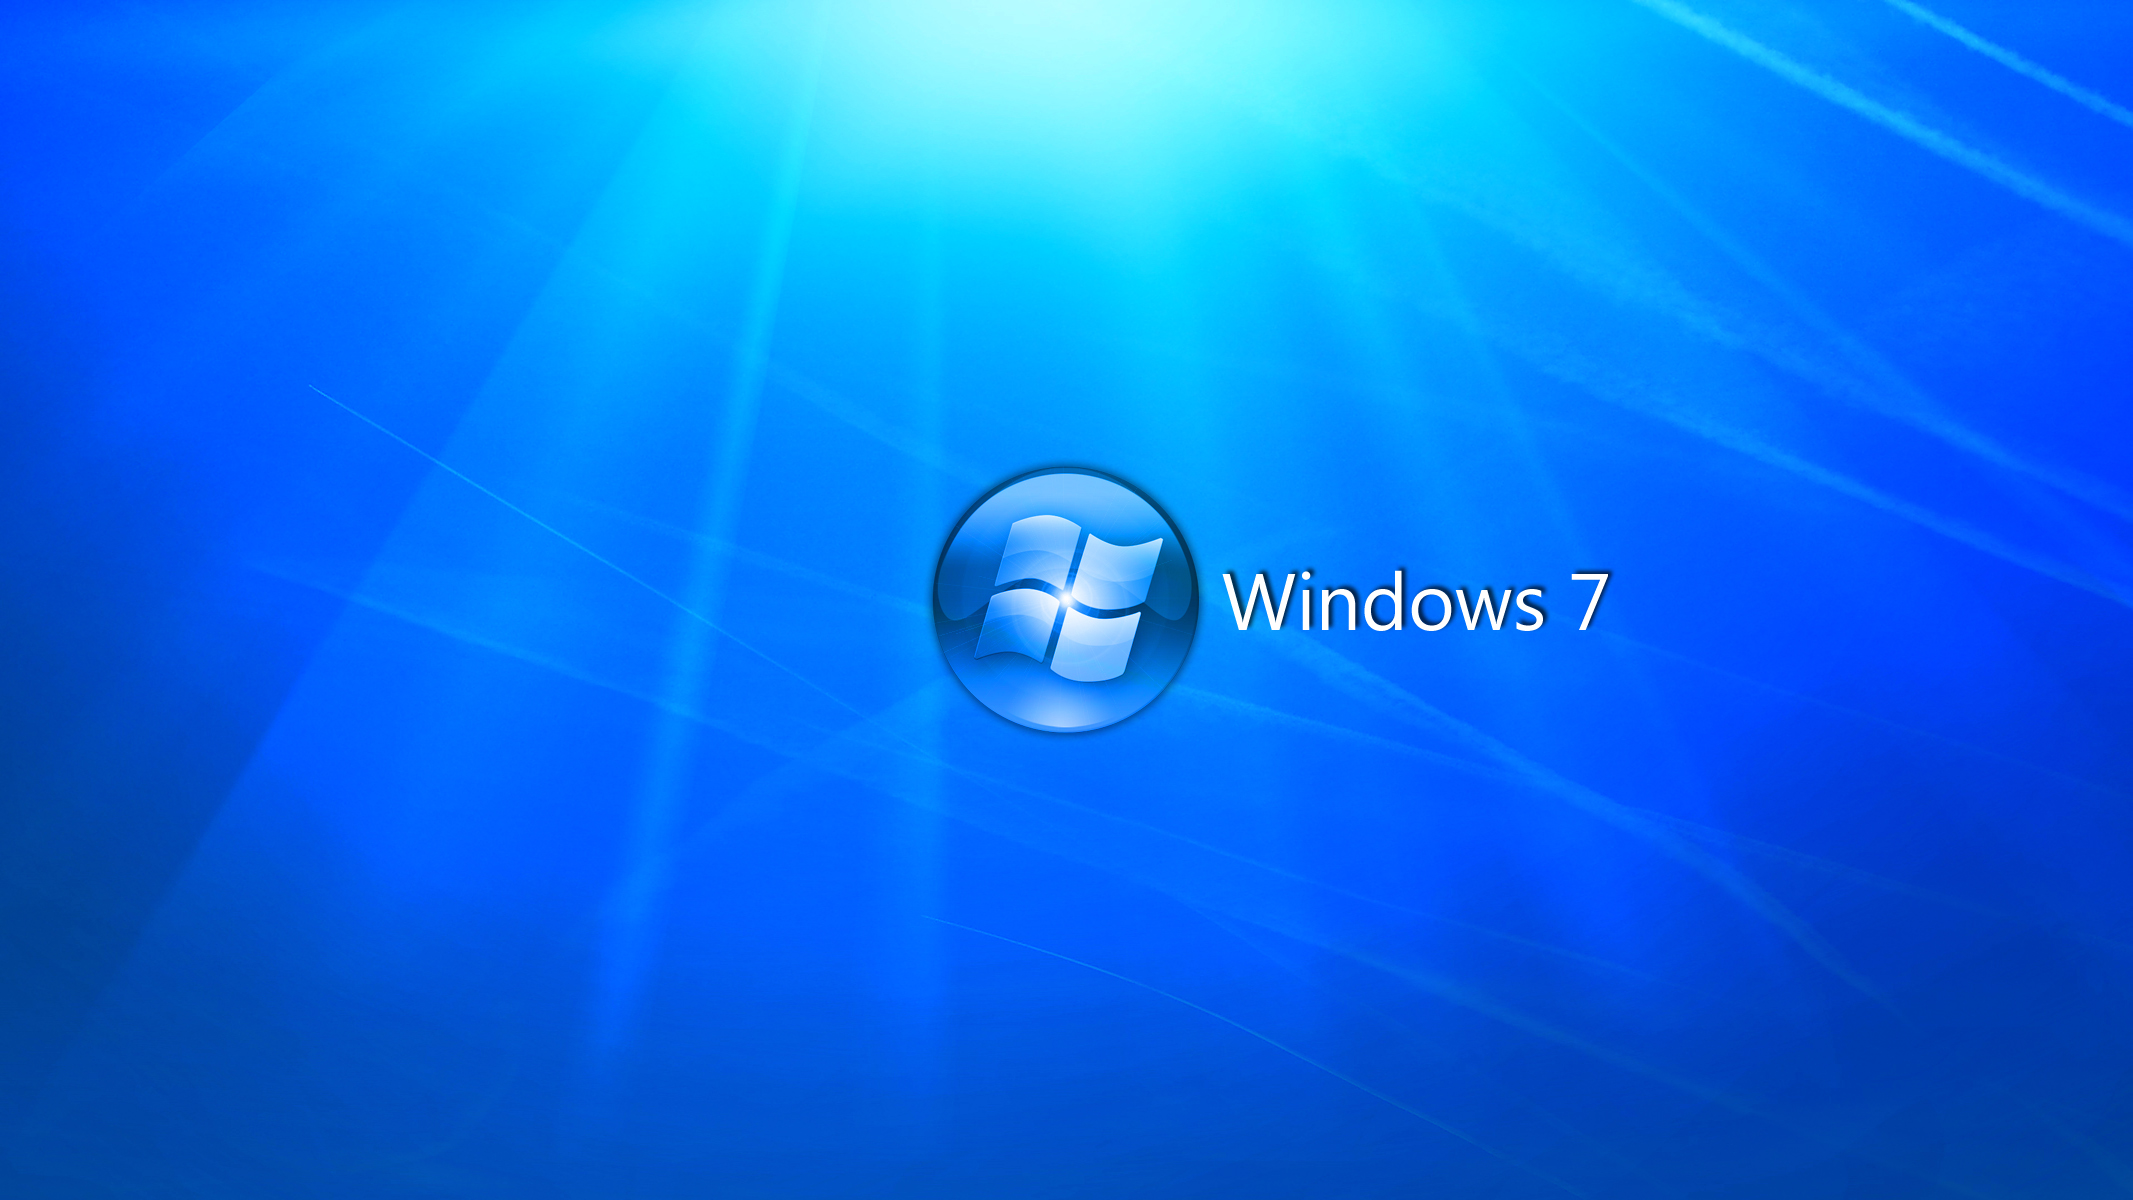 Desktop backgrounds for windows 7 hd